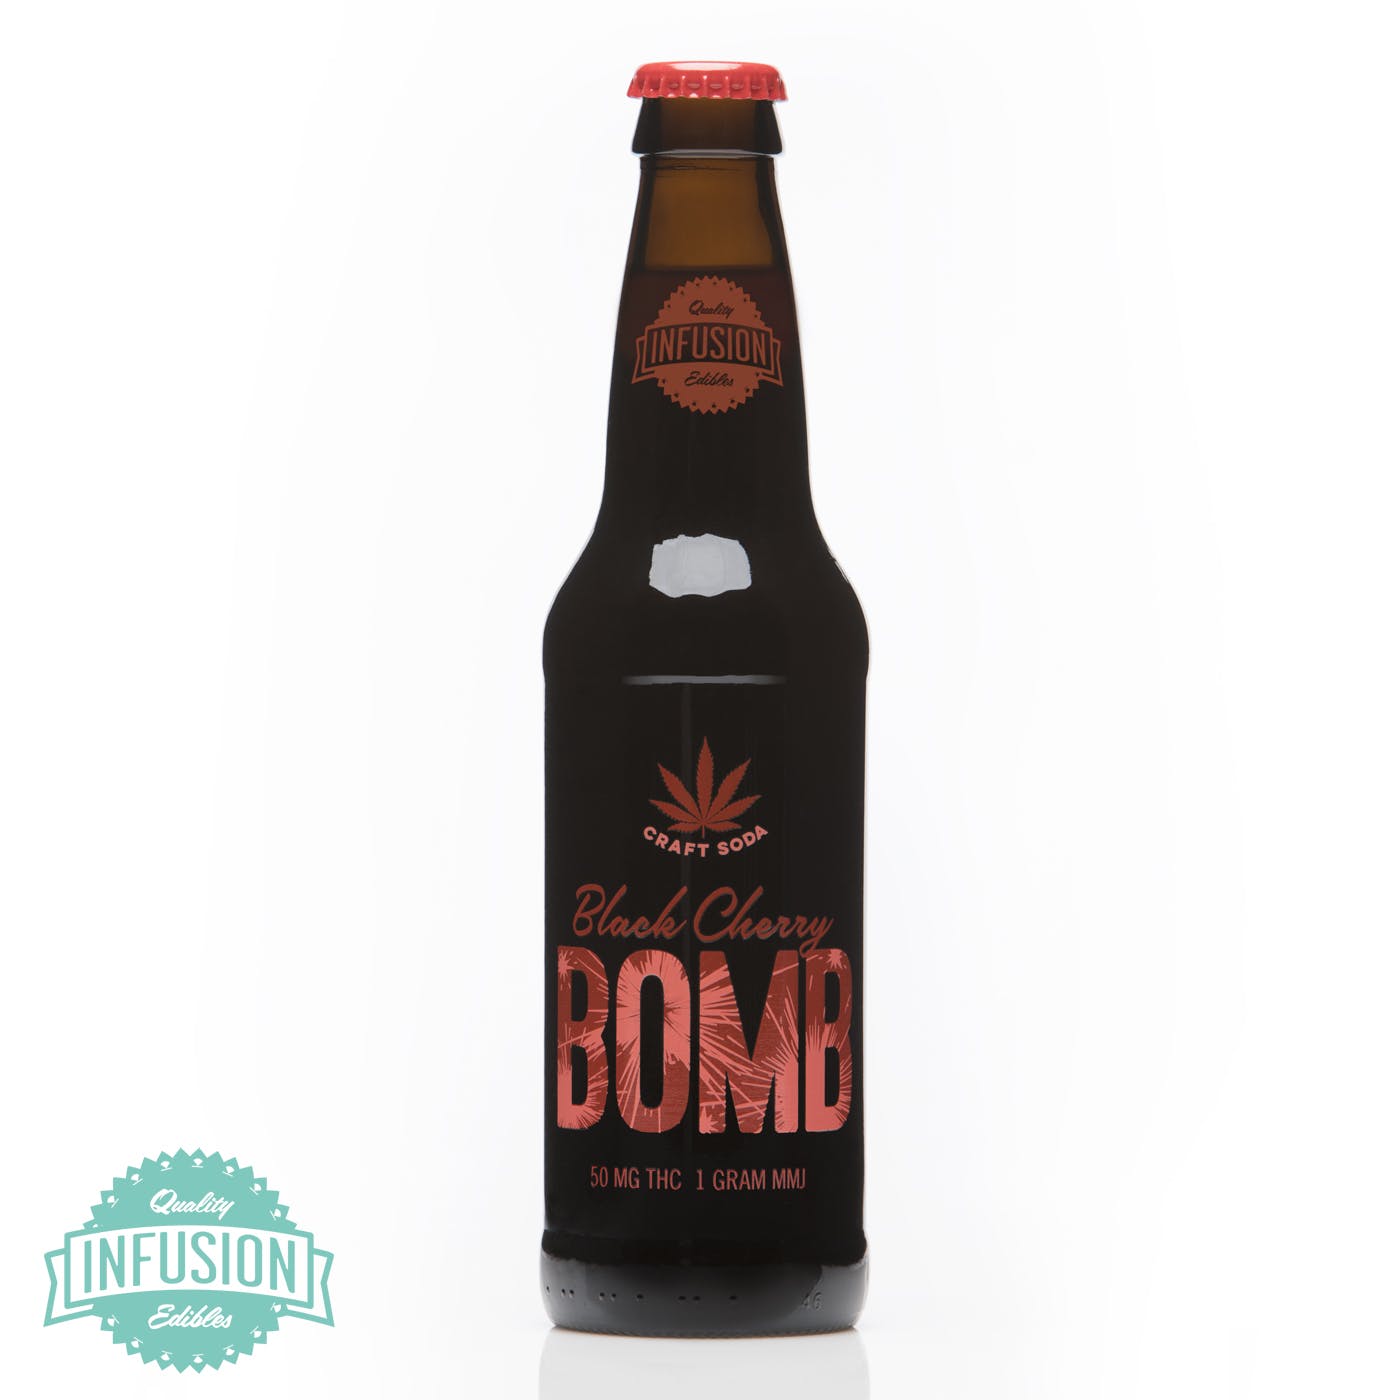 Black Cherry Bomb Soda 50mg